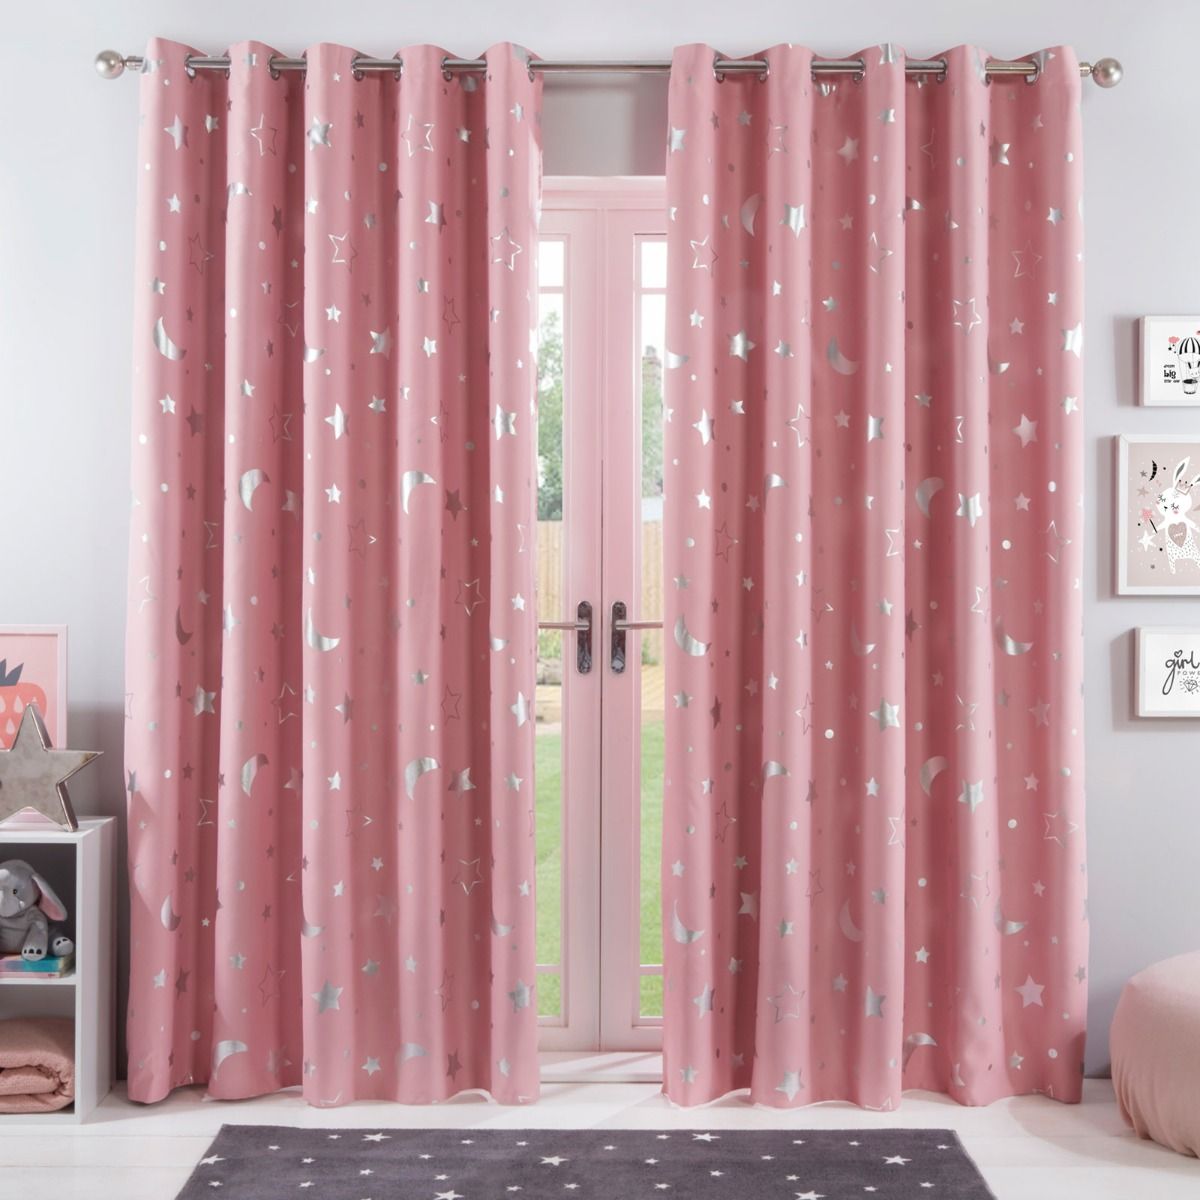 Width 46 x Drop 54 Dreamscene Eyelet Blackout Curtains Set of 2 Thermal Ring Top Window Treatment Panels Blush Pink 